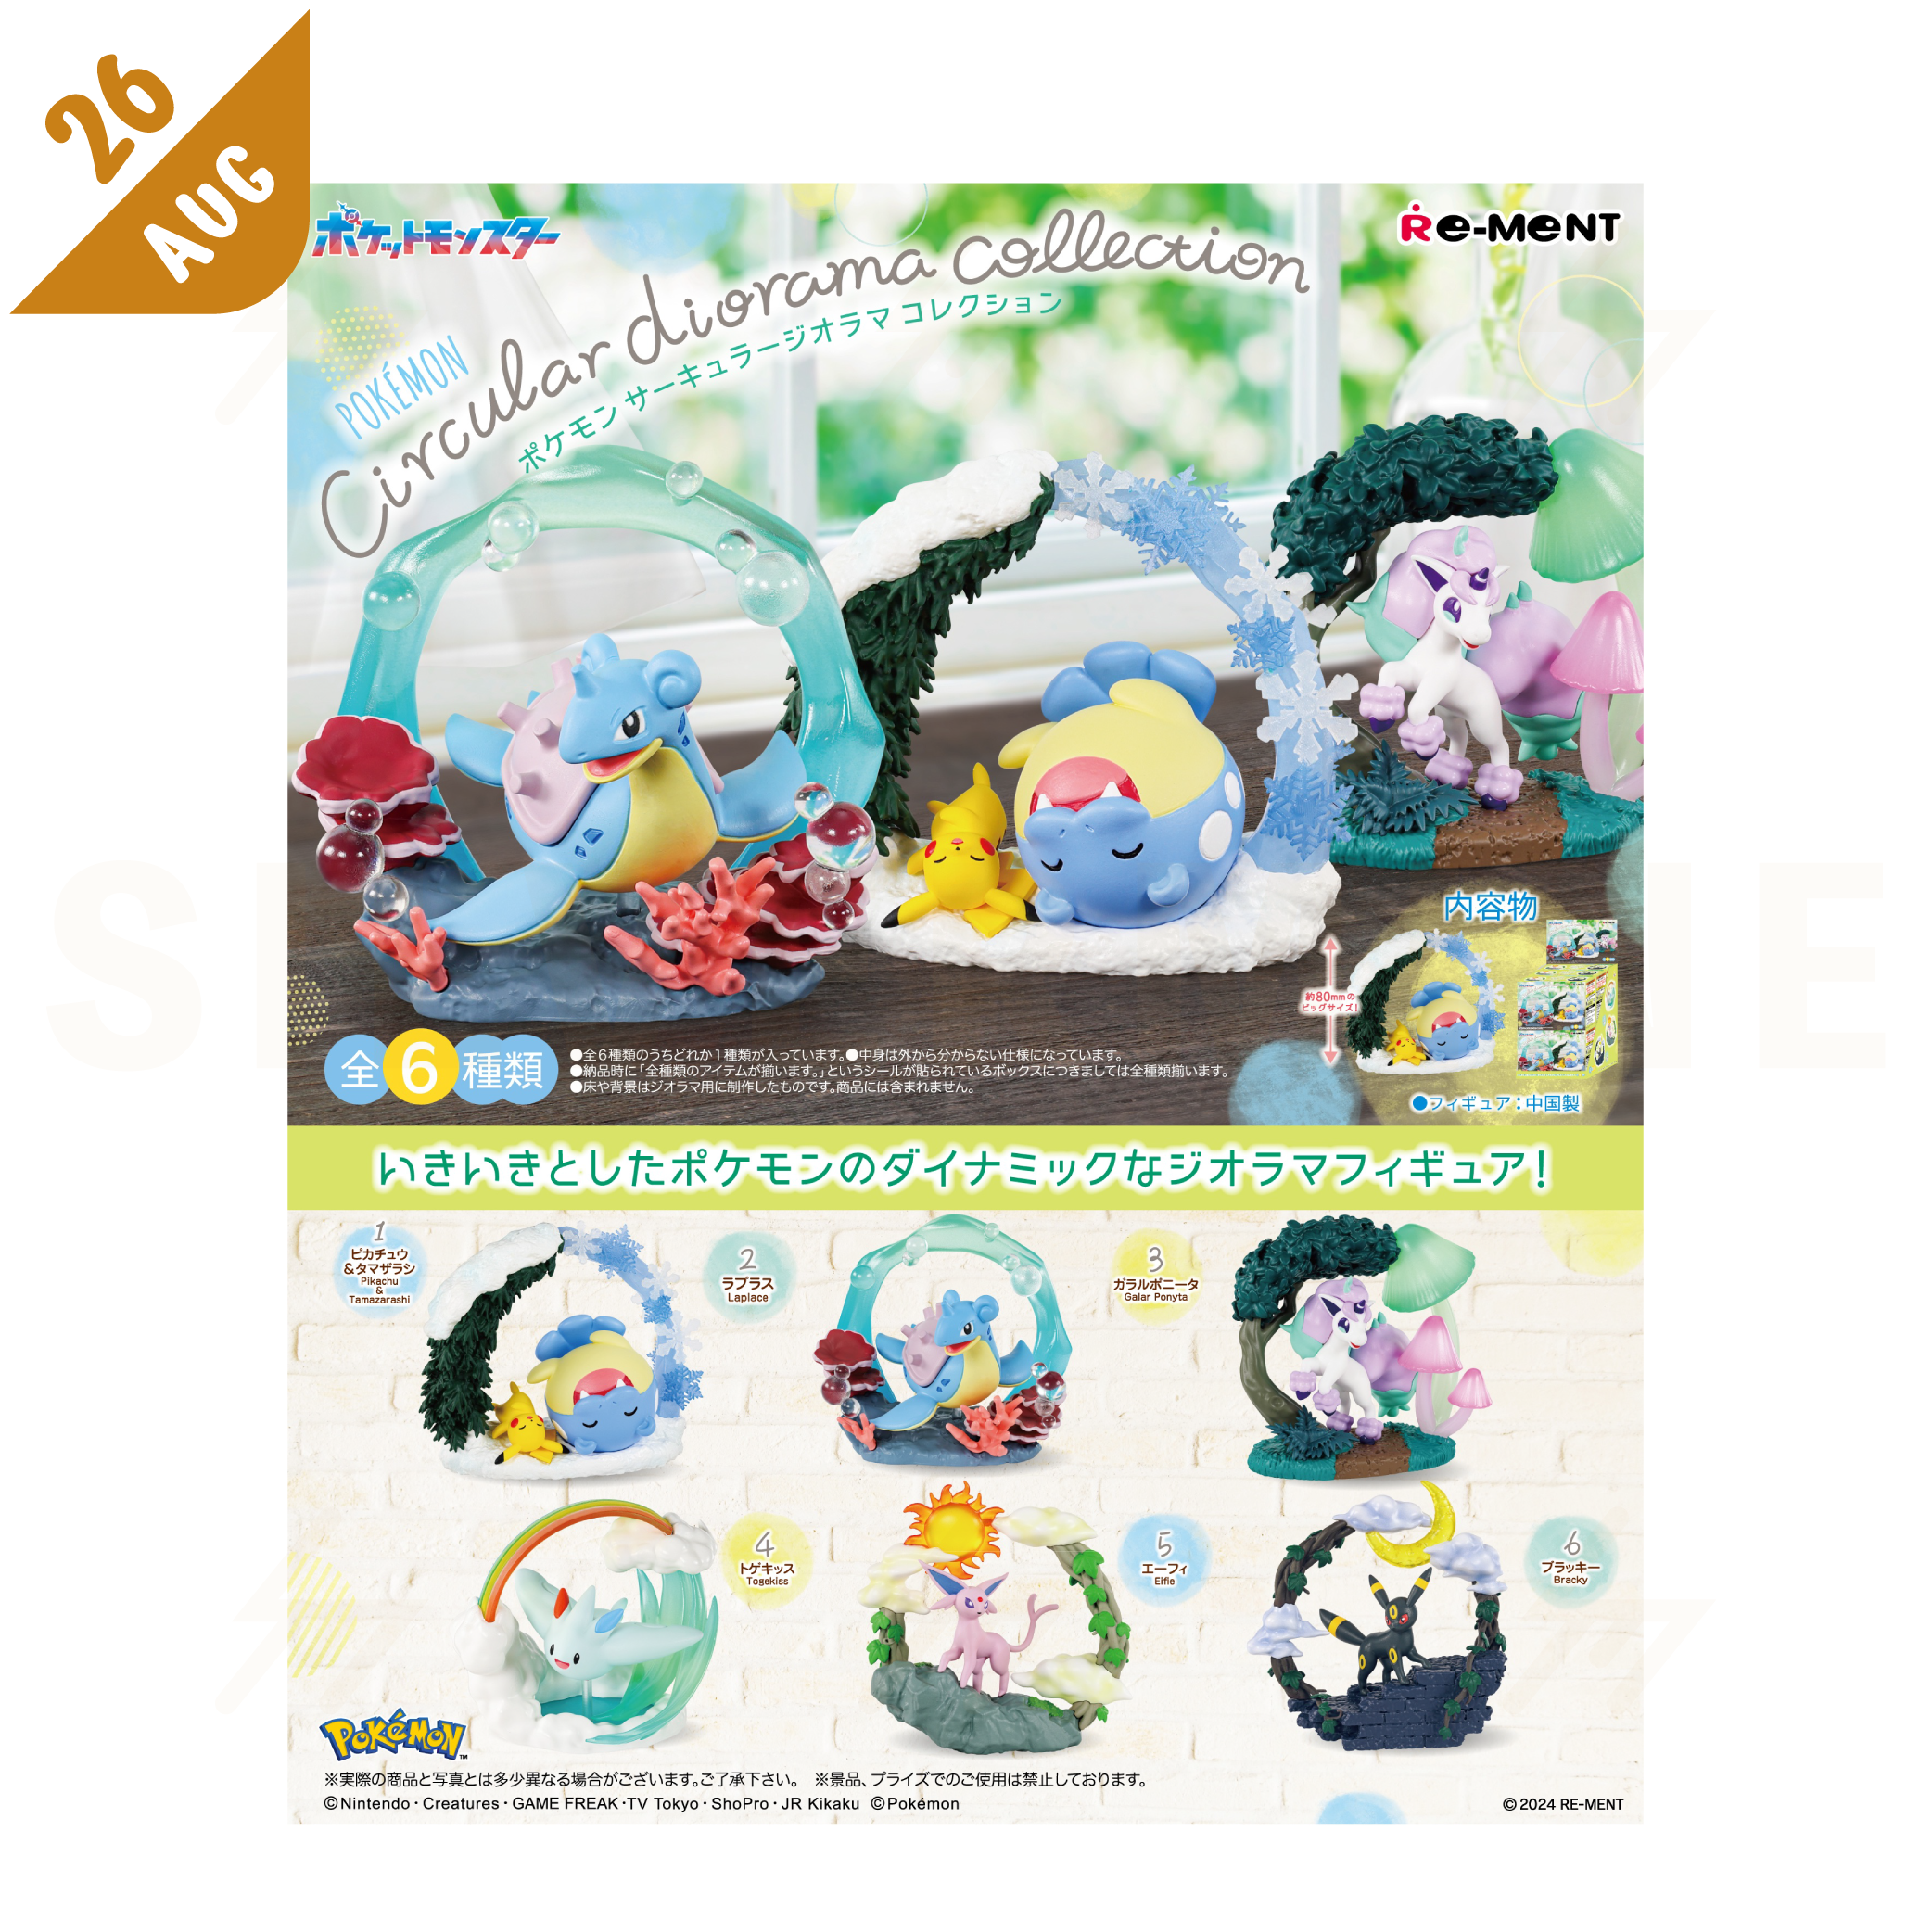 PRE-ORDER: Re-Ment - Blind Box - Pokemon - Circular Diorama Collection